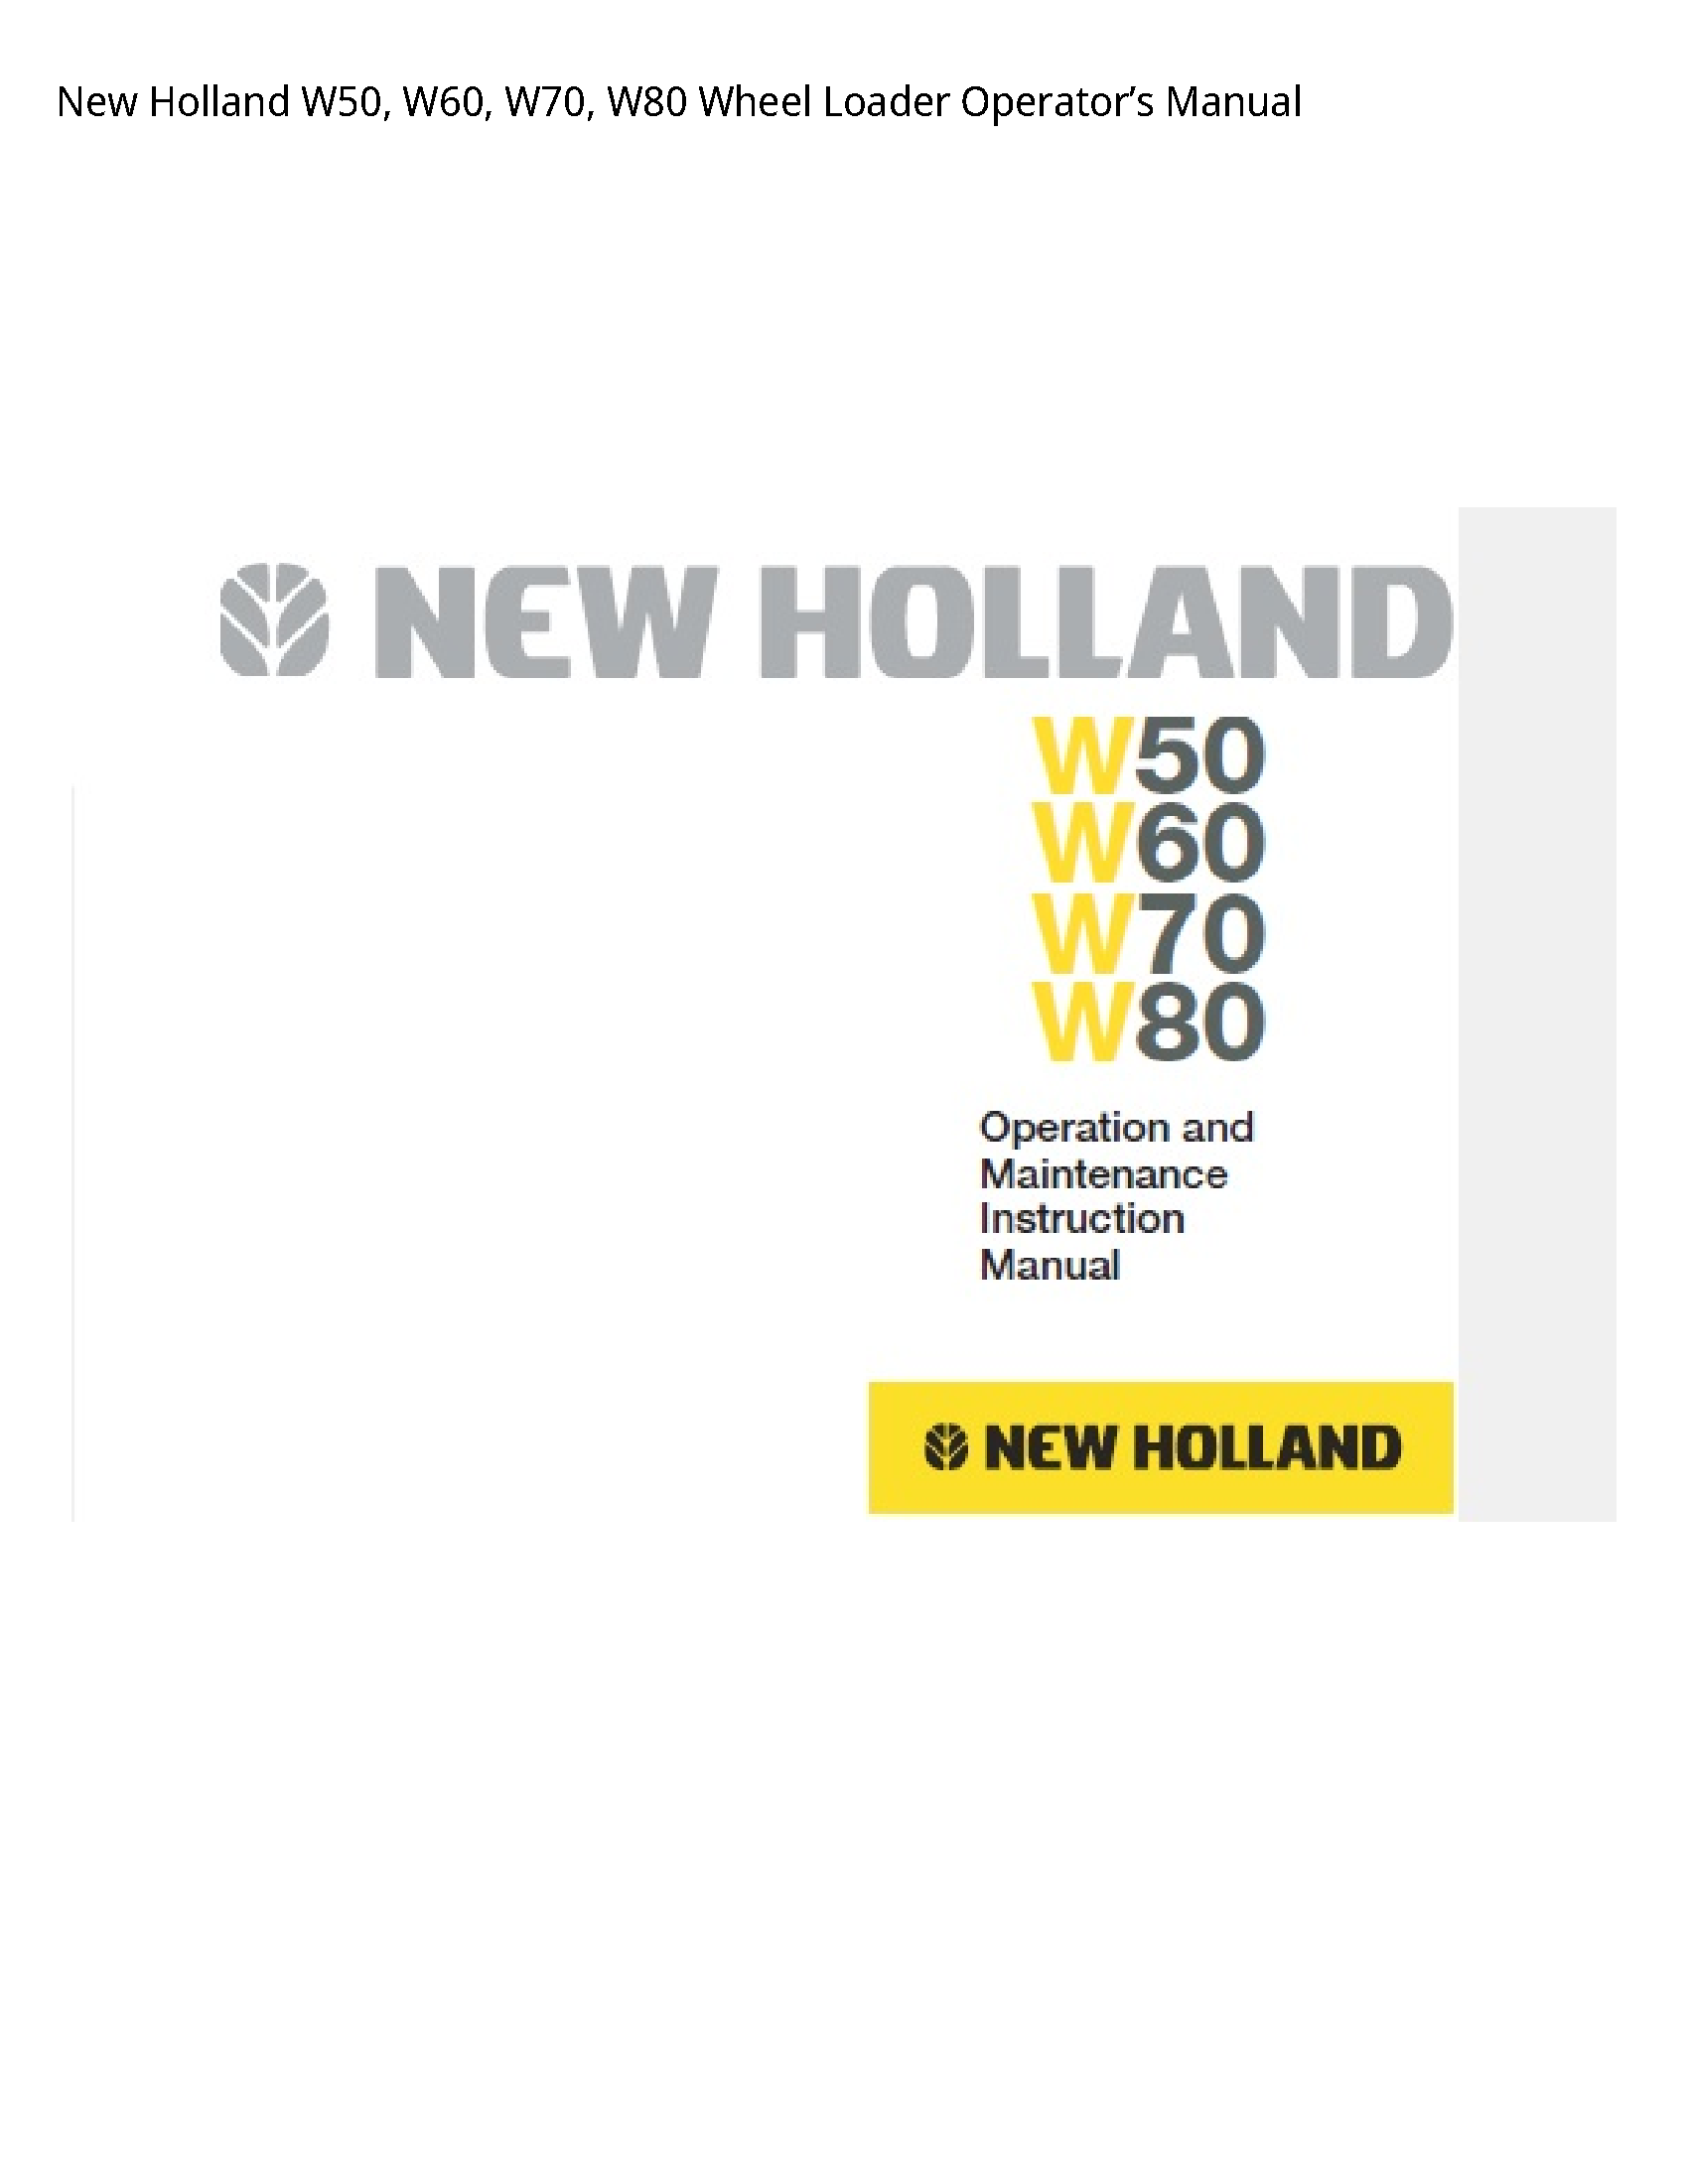 New Holland W50 Wheel Loader Operator’s manual